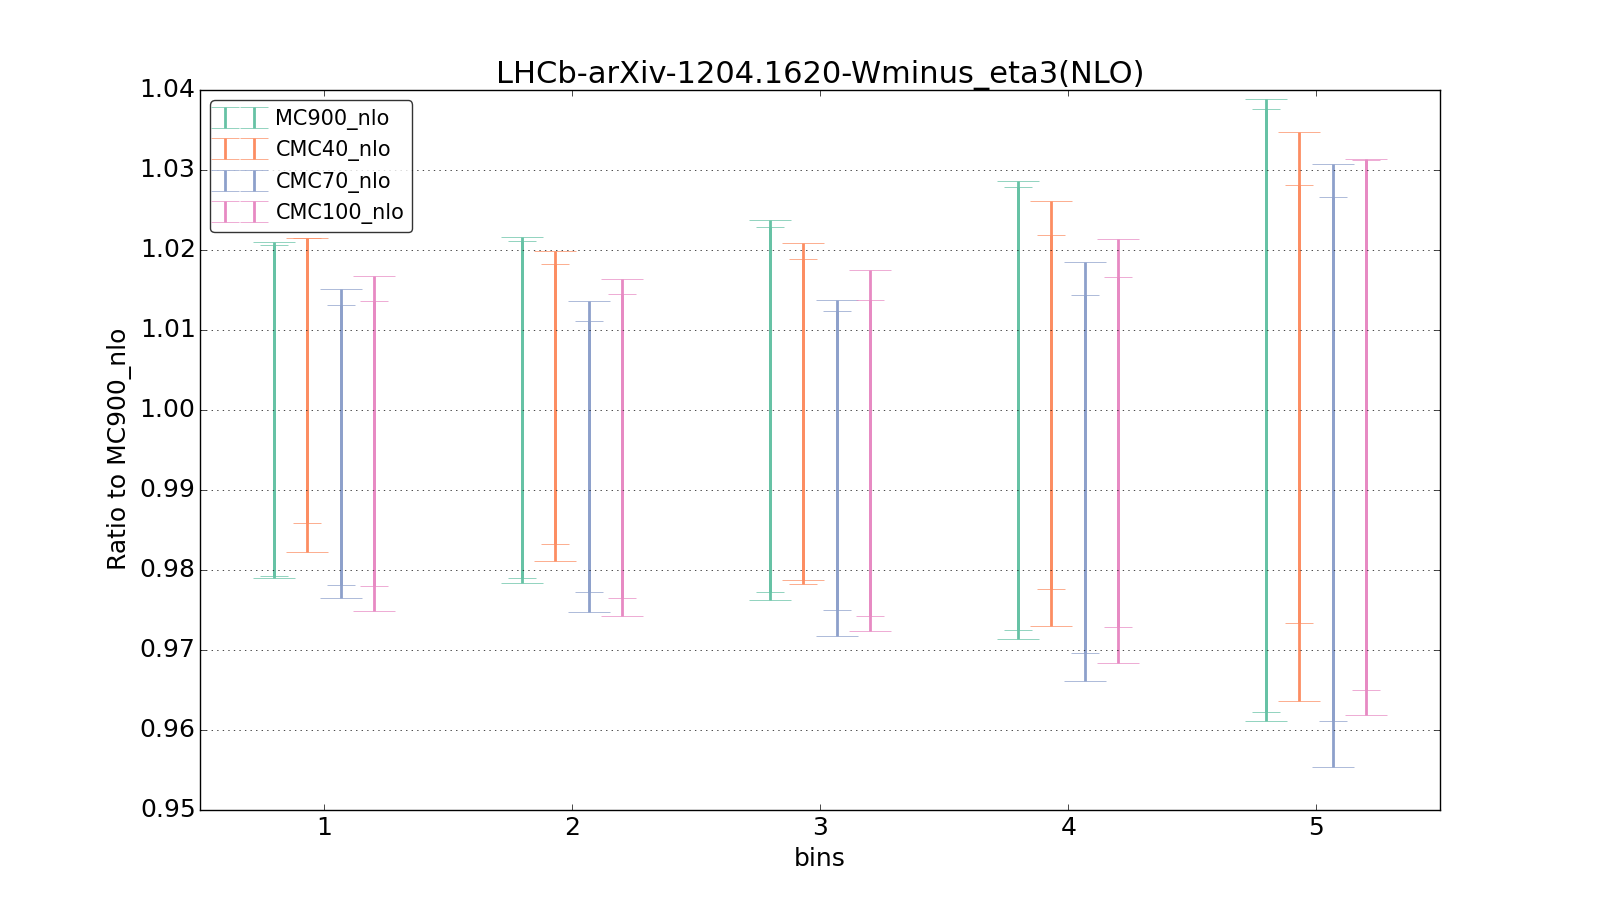 figure plots/CMCpheno/group_1_ciplot_LHCb-arXiv-12041620-Wminus_eta3(NLO).png